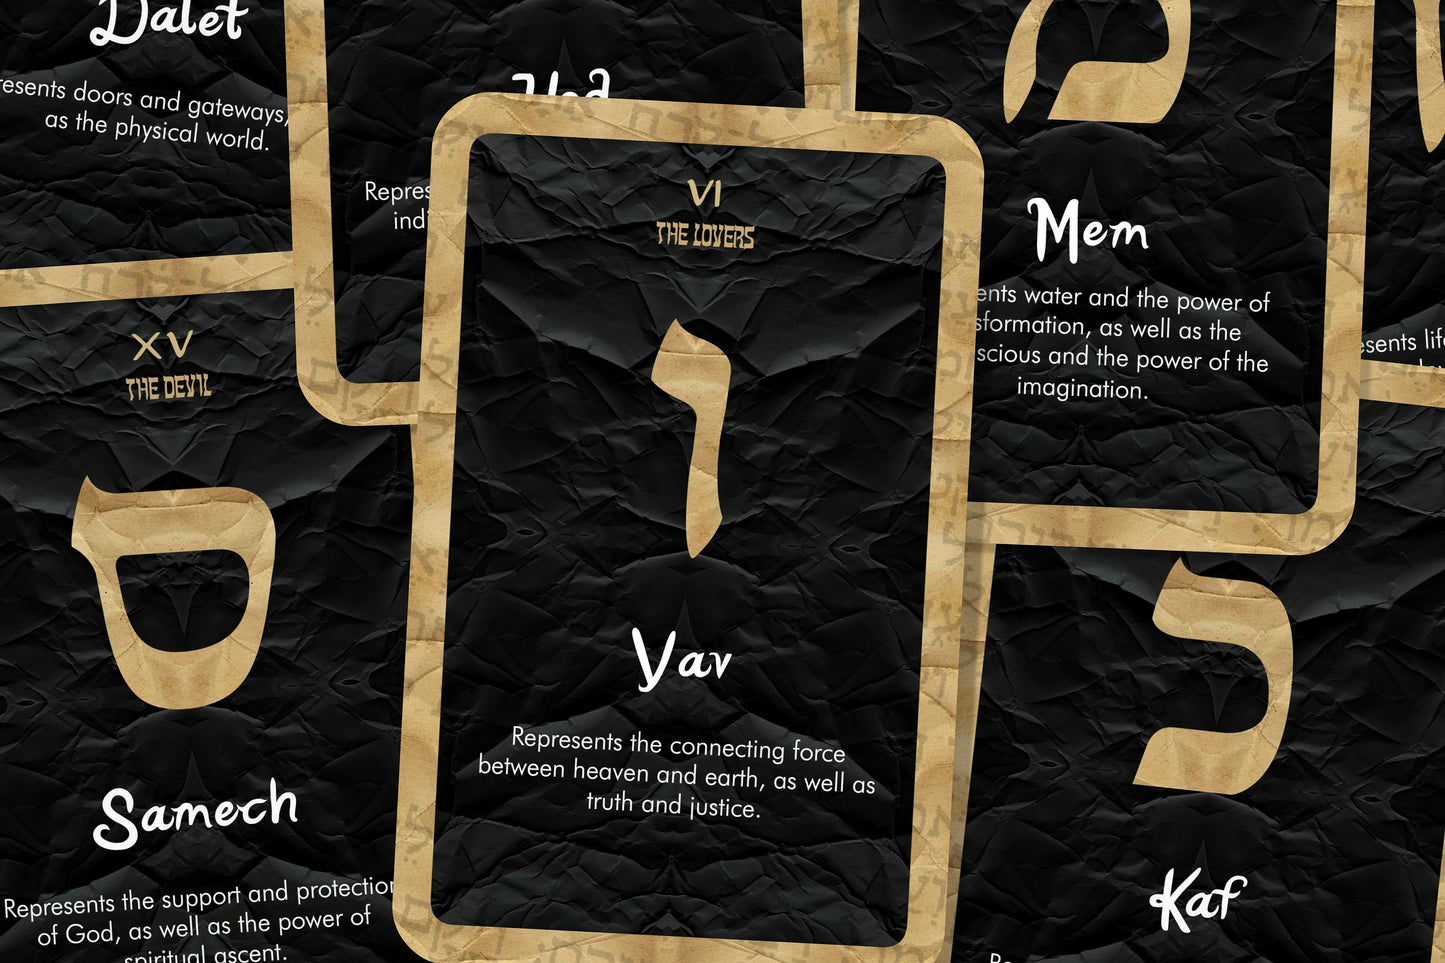 The Alphabet Tarot - Hebrew Alphabet